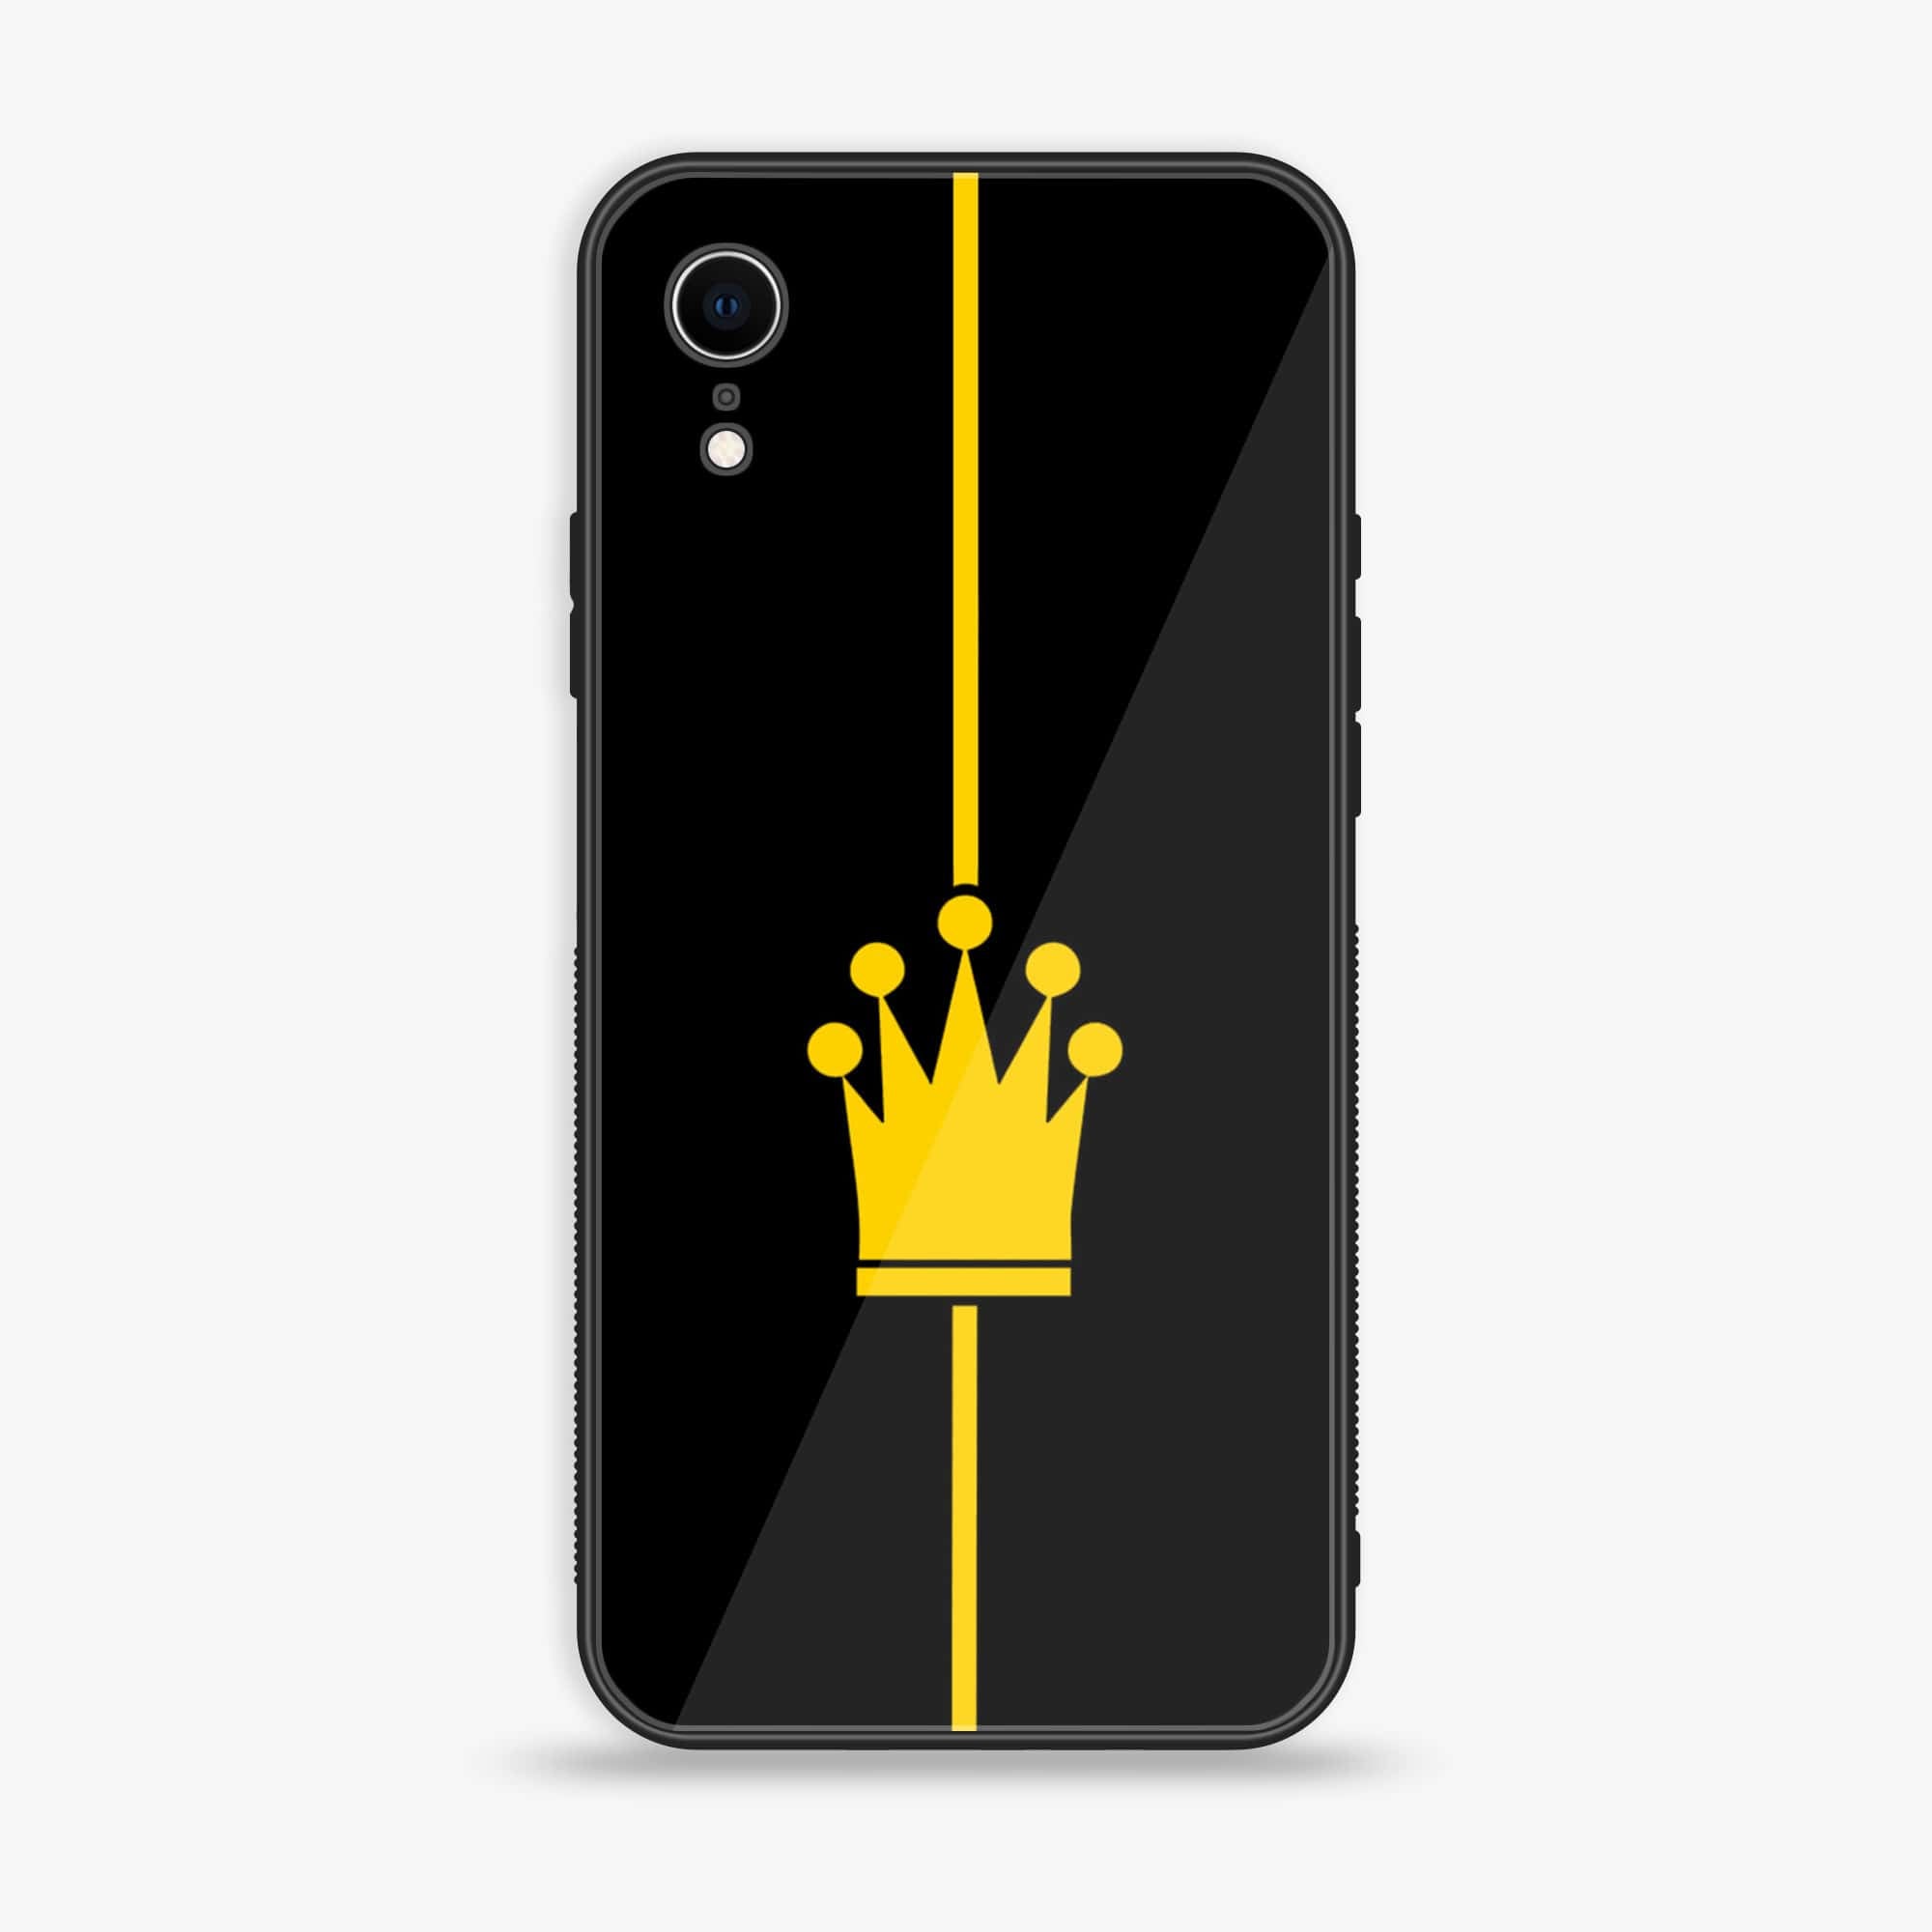 iPhone XR - King Series v2.0 - Premium Printed Glass soft Bumper shock Proof Case